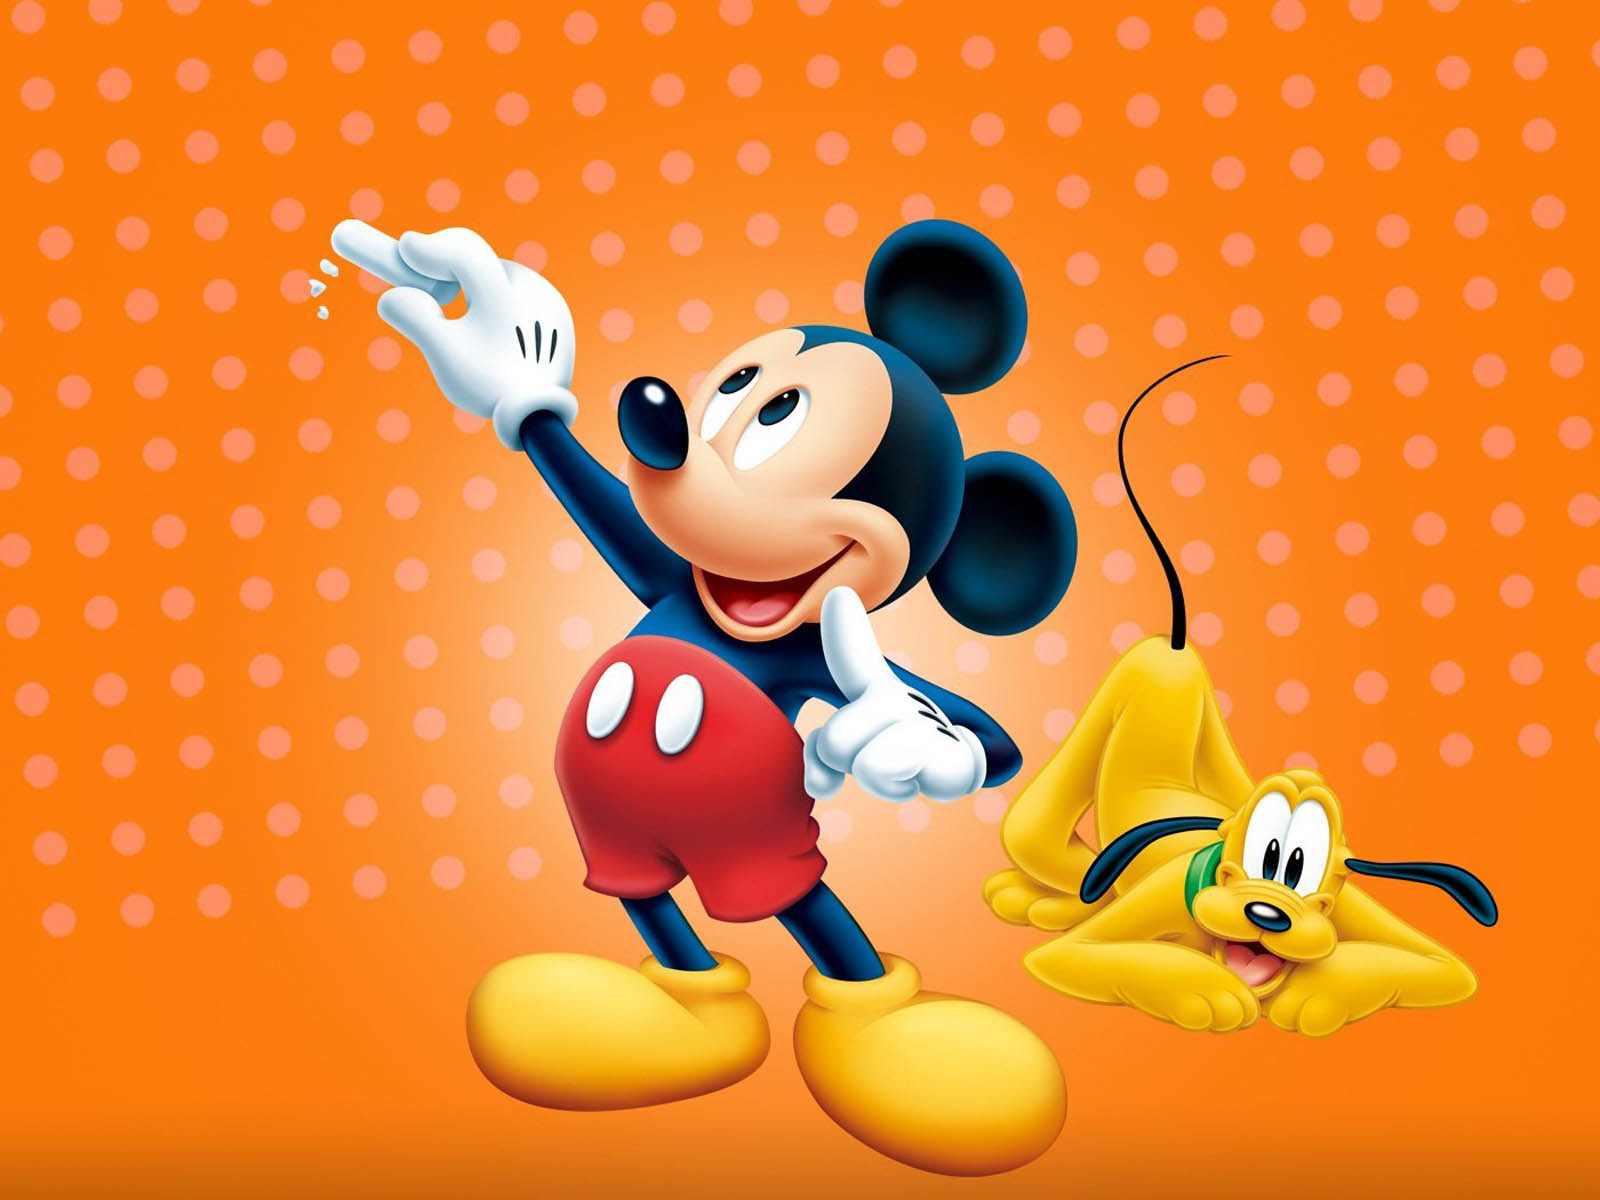 Mickey Mouse HD Wallpaper Wonderwordz